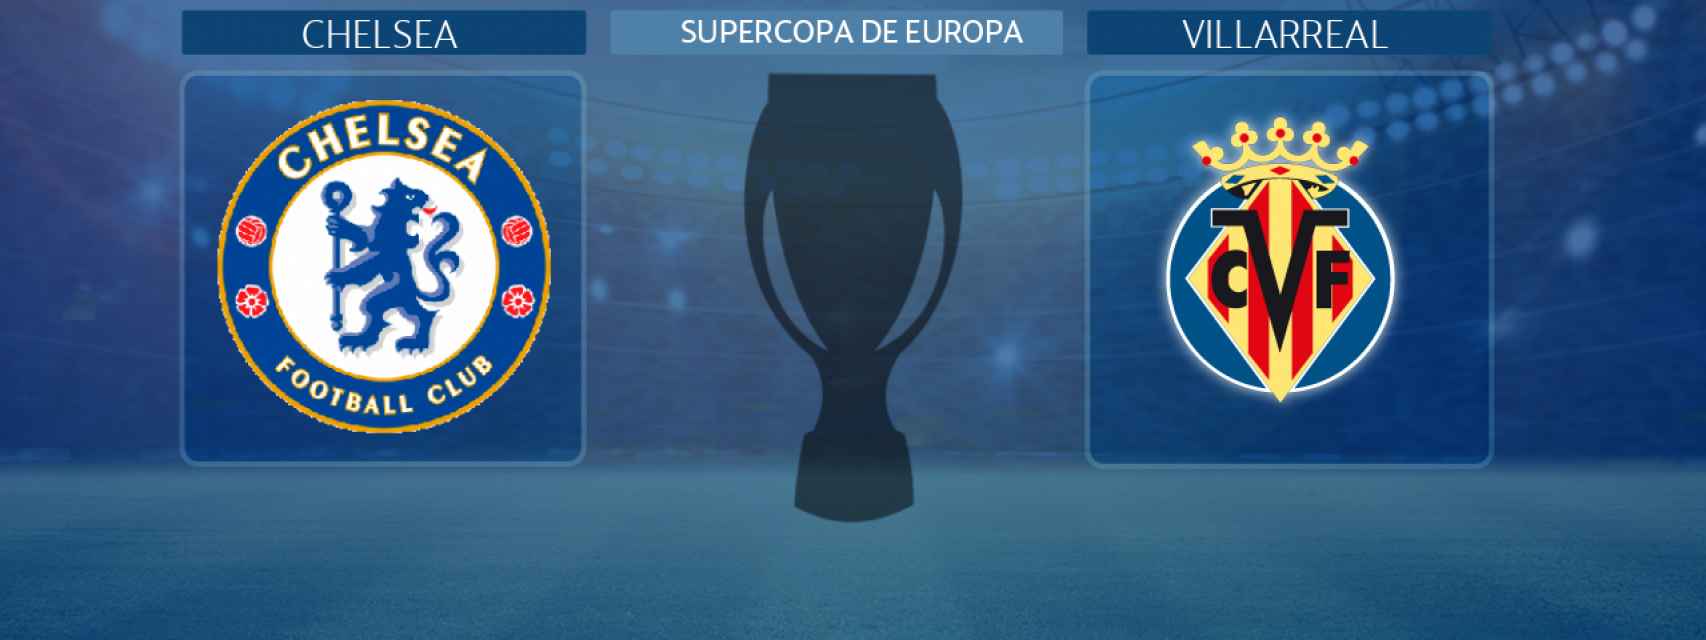 Chelsea - Villarreal, Supercopa de Europa